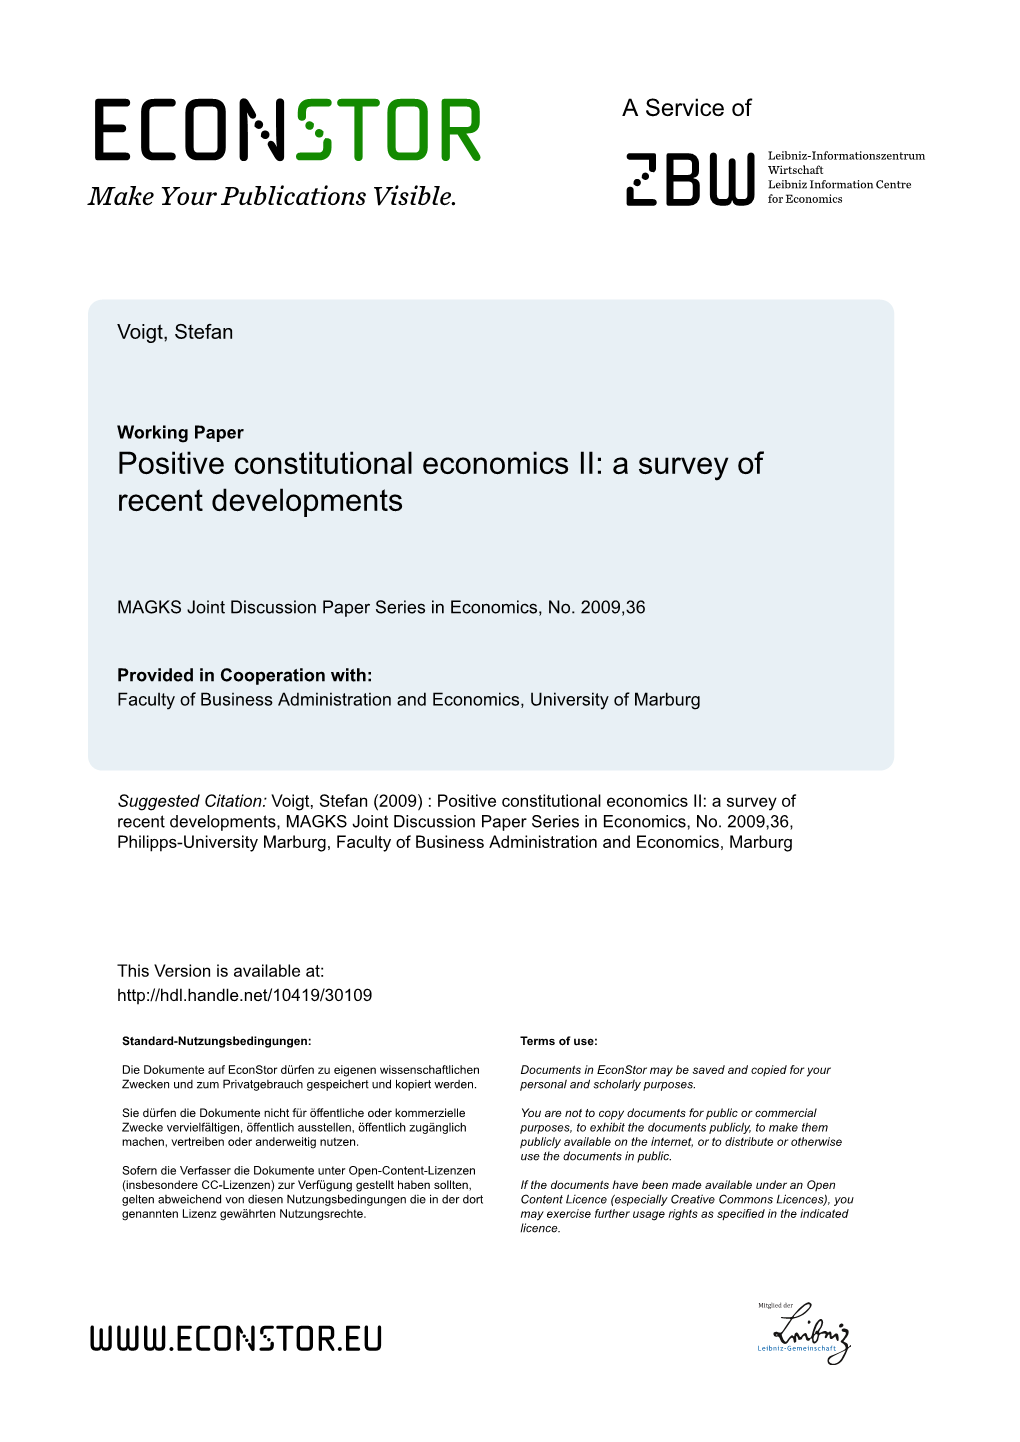 Positive Constitutional Economics II: a Survey of Recent Developments